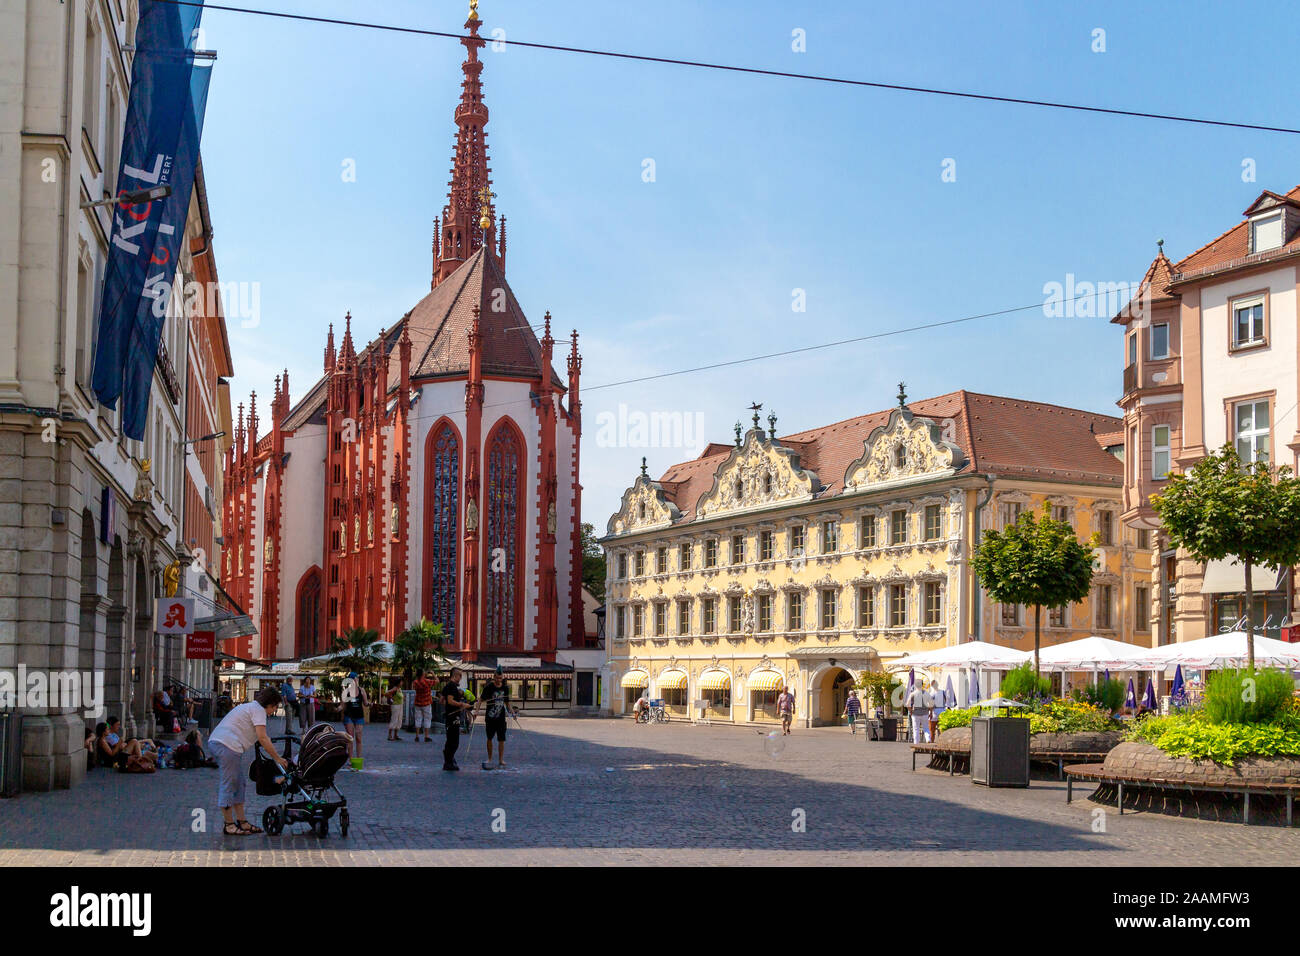 Wurzburg, Germany - August 9, 2015: Oberer Markt (upper market) with Marienkapelle (St. Mary's Chapel) in Würzburg, Wurzburg, Lower Franconia, Bavaria Stock Photo